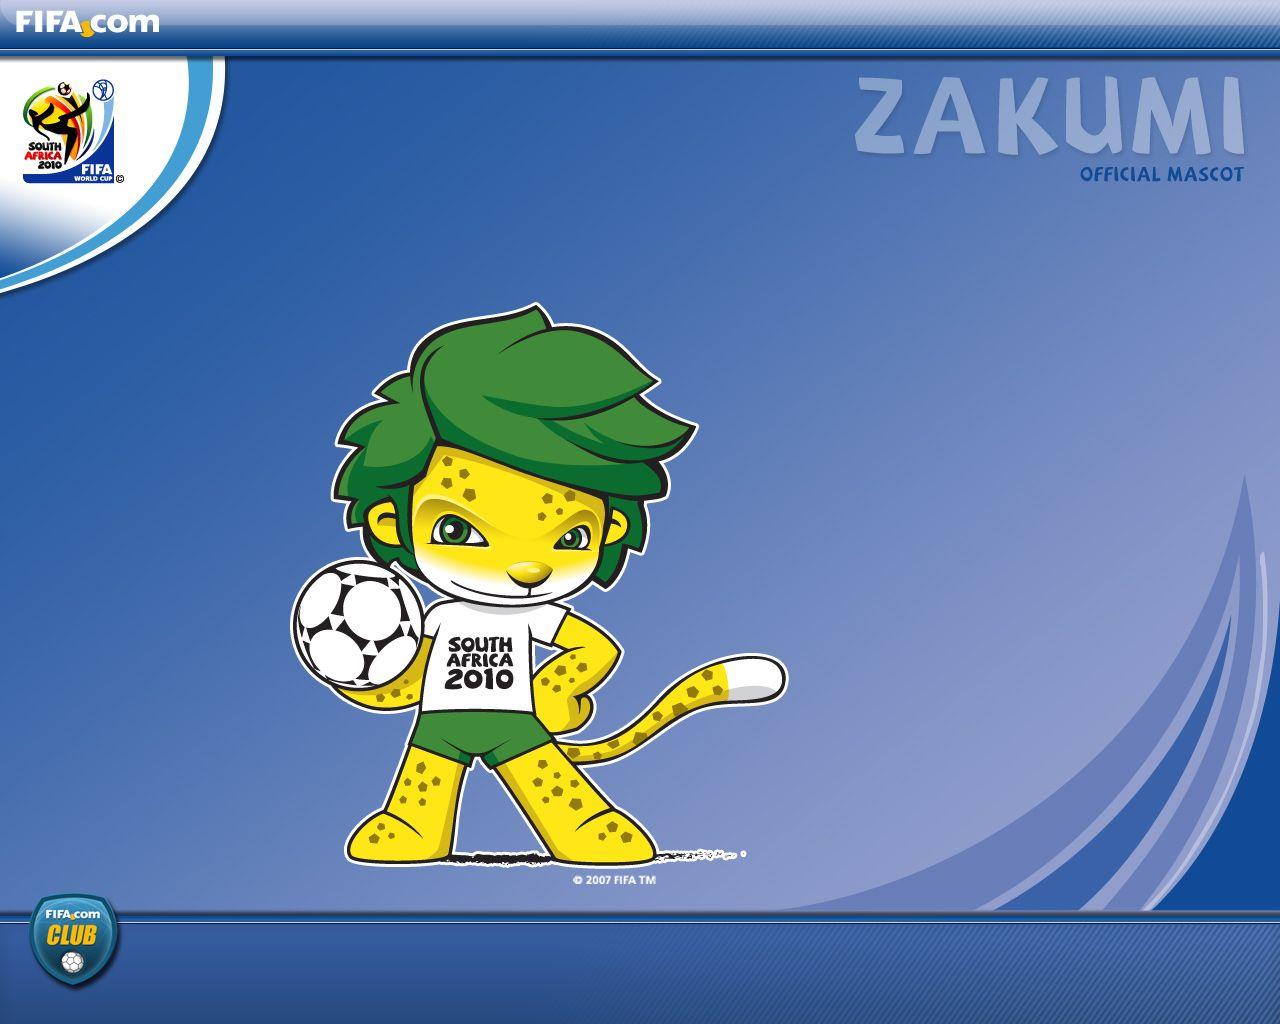 Zakumi Soccer Mascot Download HD Wallpaper and Free Image